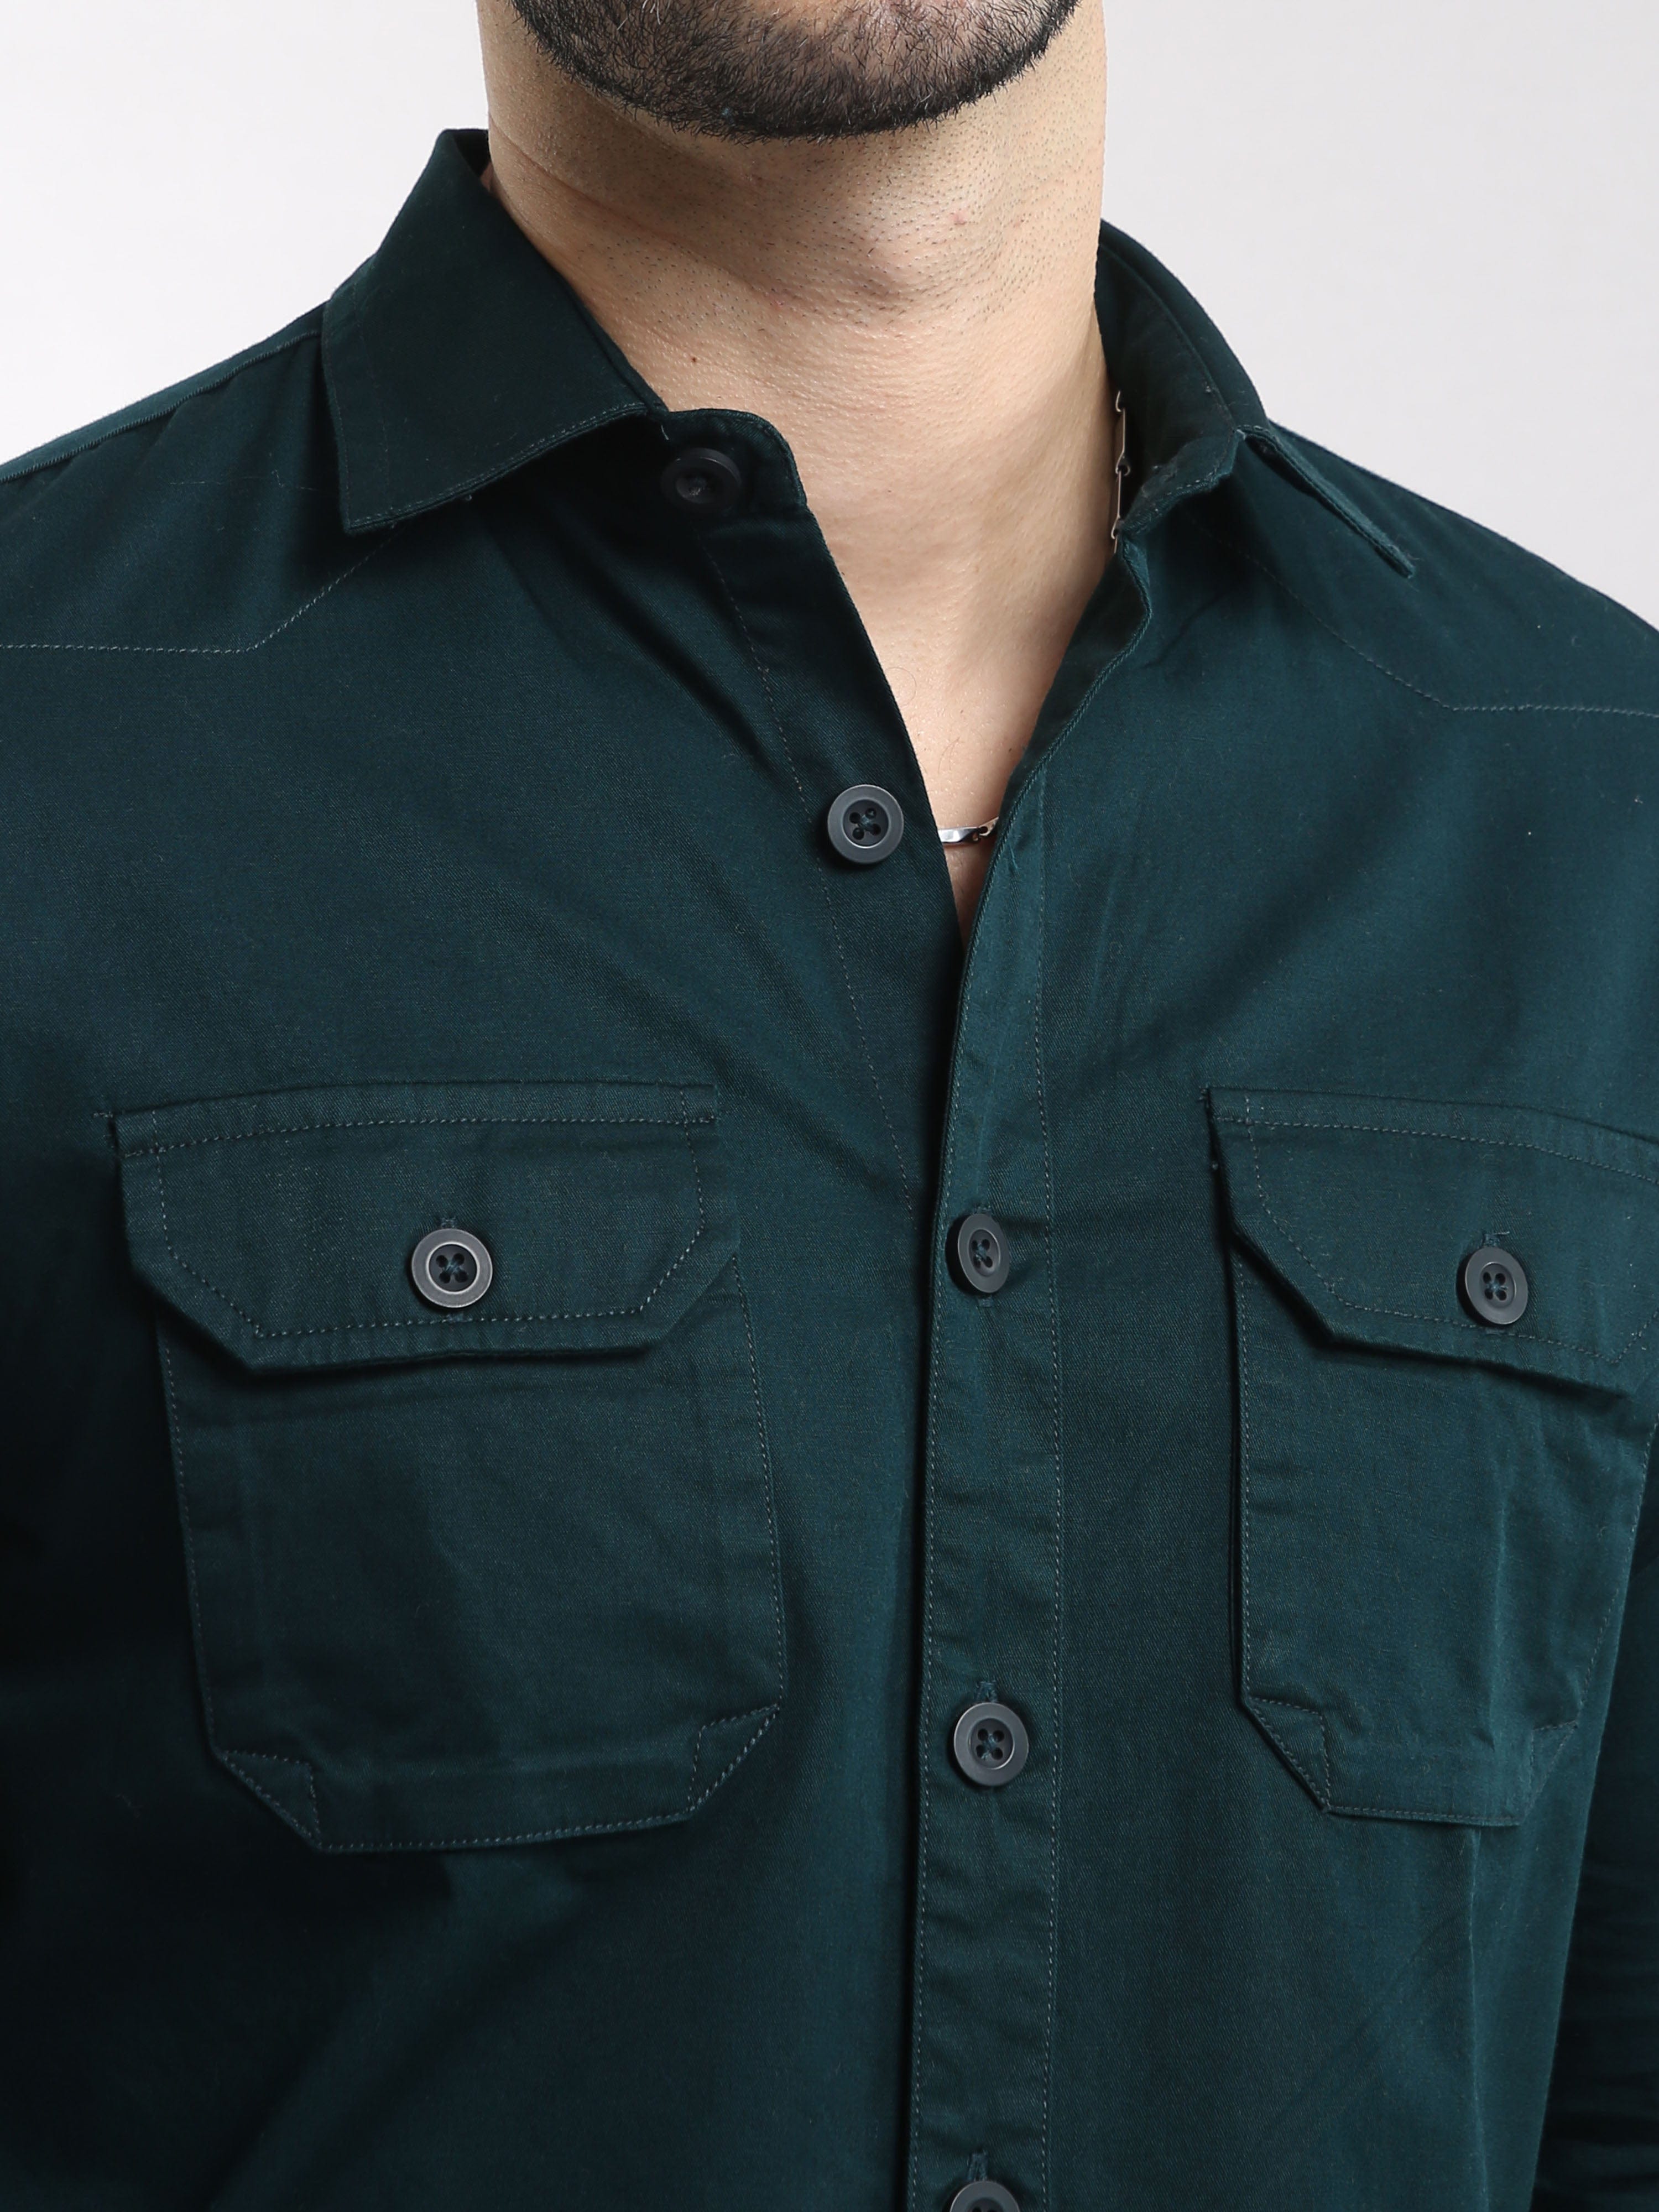 Brunswick Green Twill Cotton Double Pocket Shirt